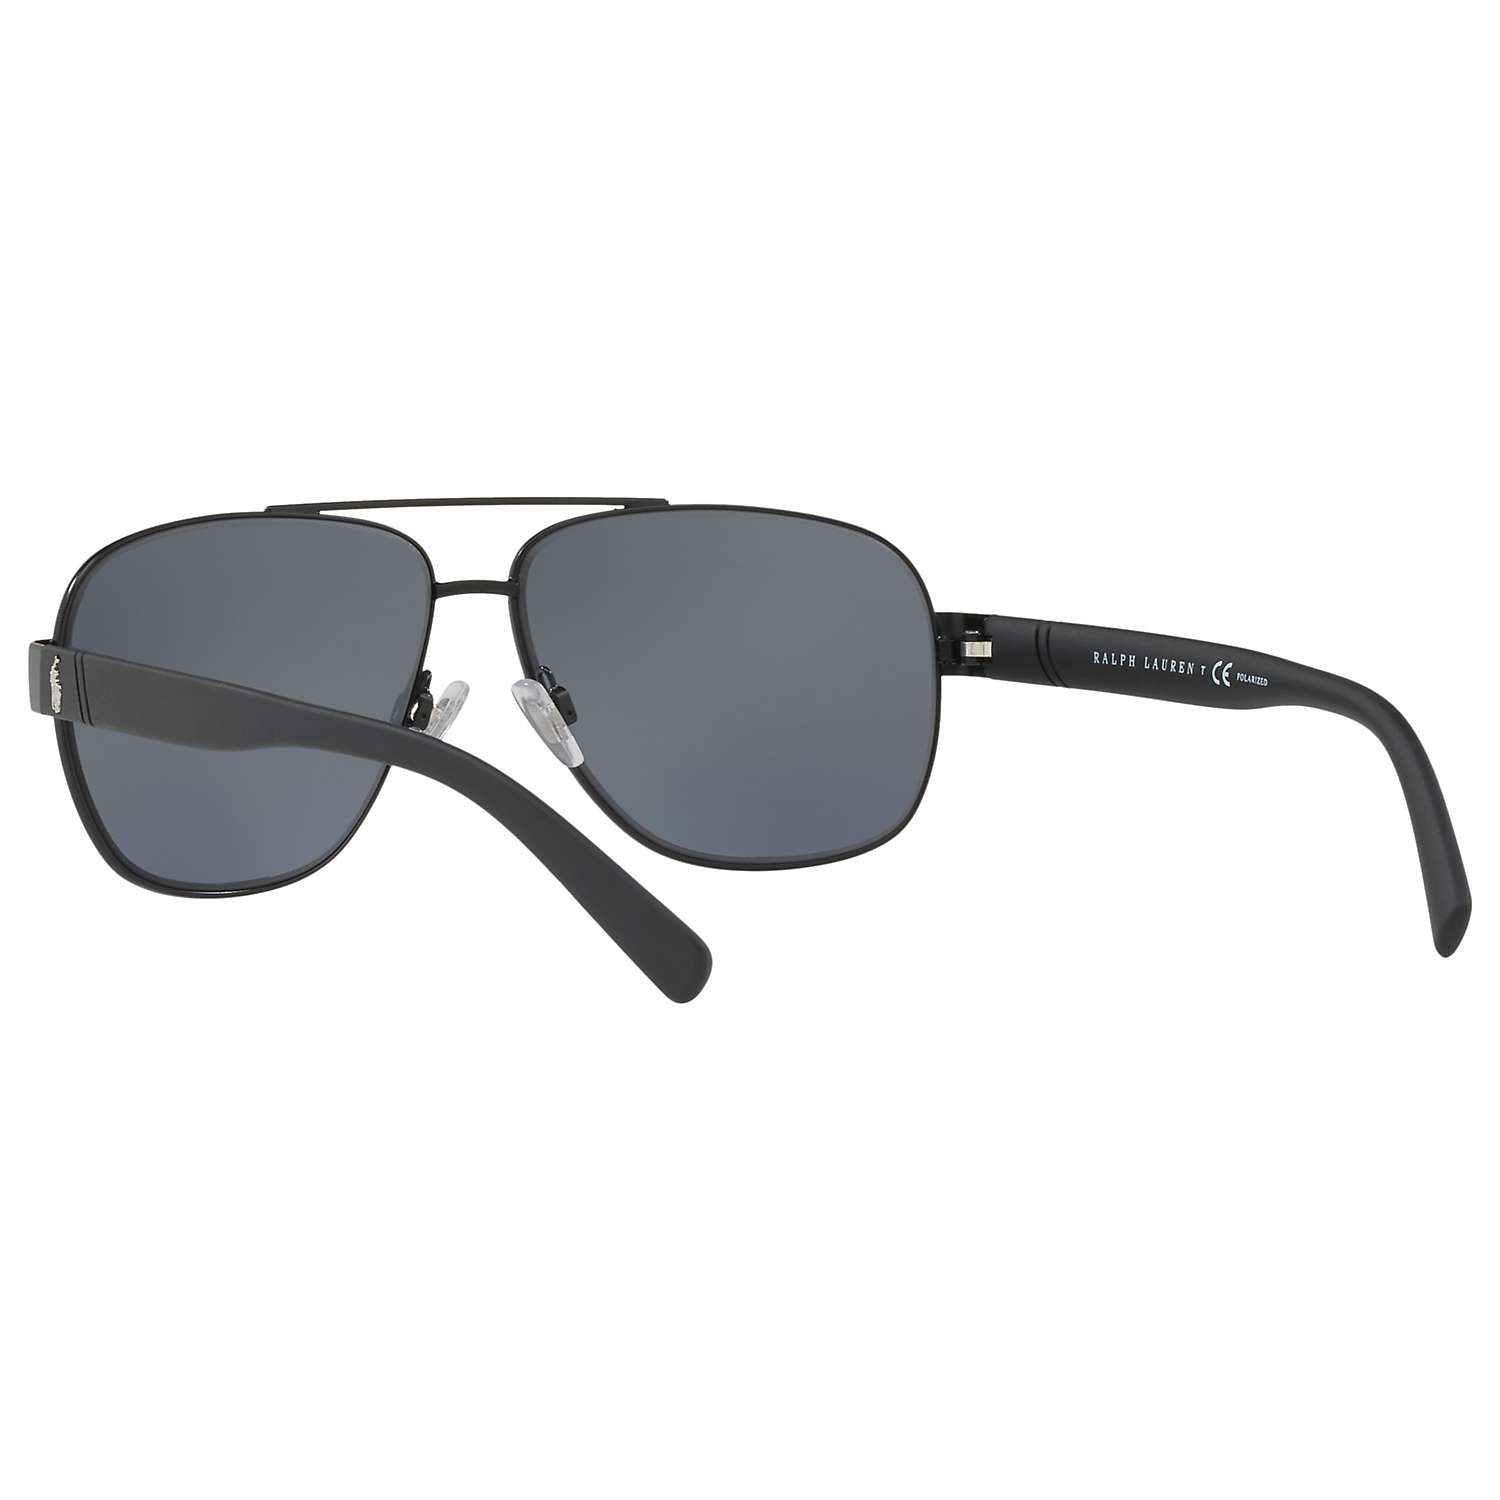 Buy Polo Ralph Lauren PH3110 Men's Polarised Aviator Sunglasses, Black/Grey Online at johnlewis.com